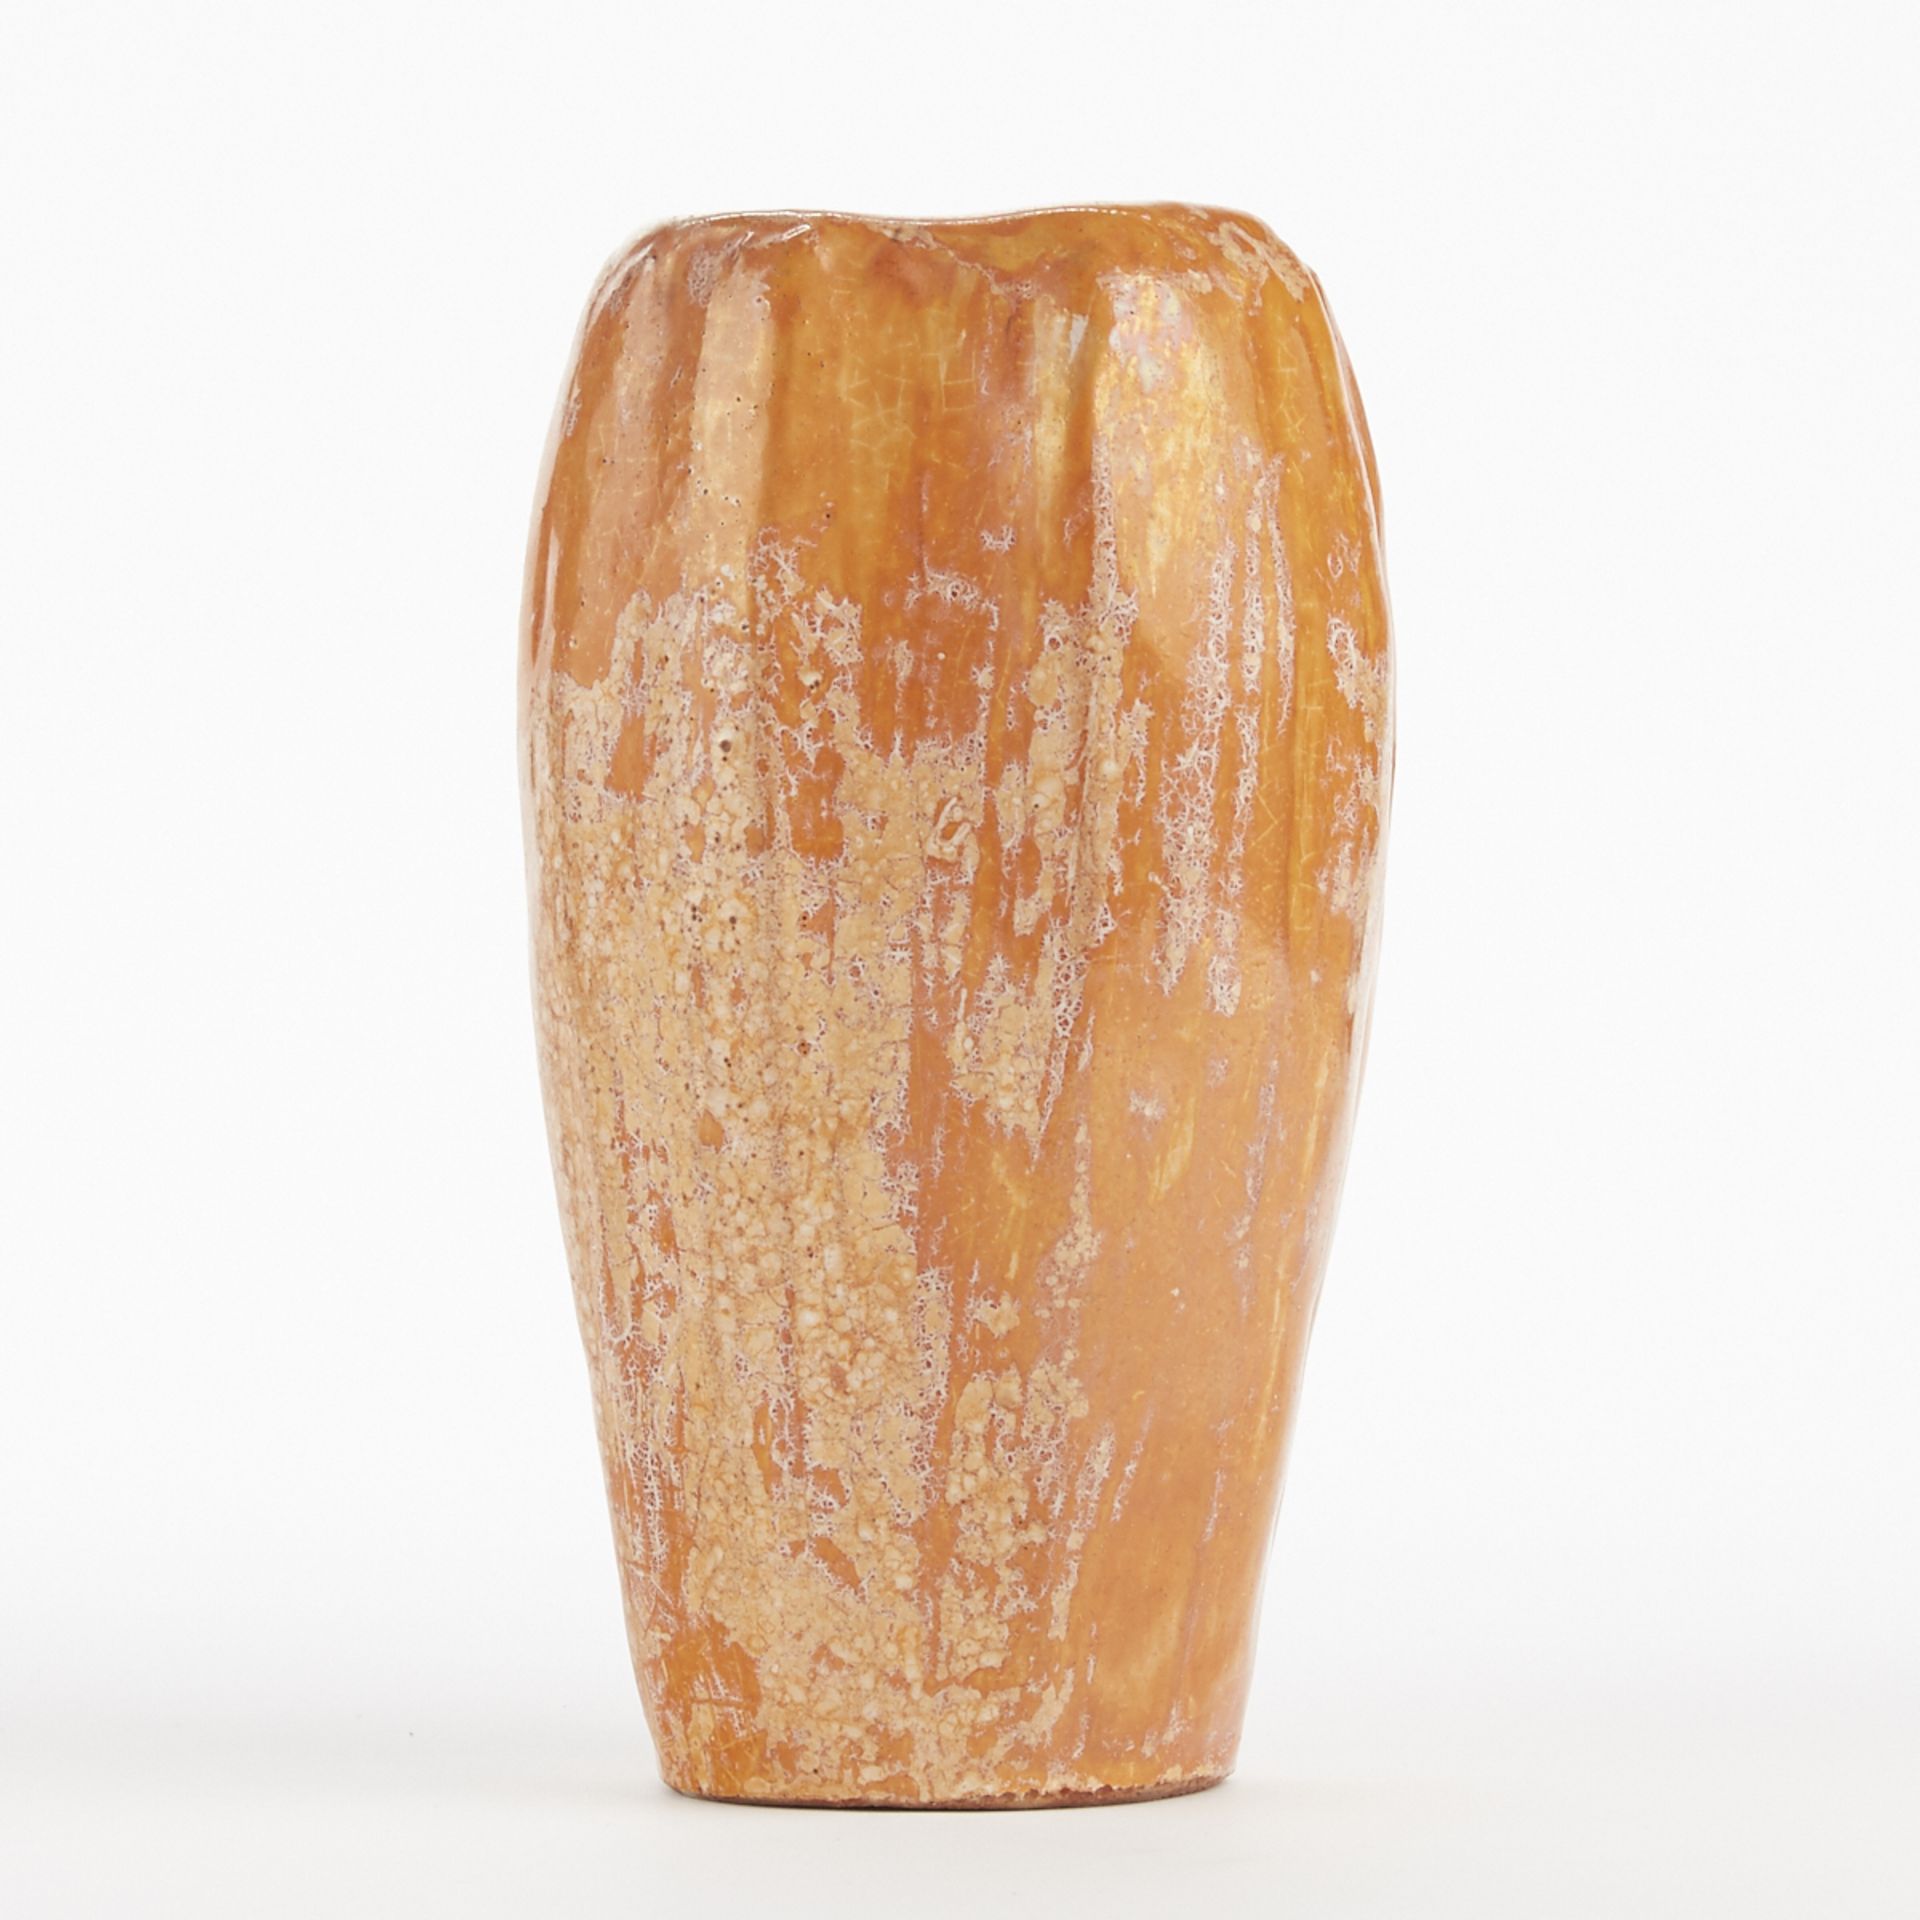 Arequipa Rhead Art Pottery Crystalline Organic Vase - Image 3 of 6